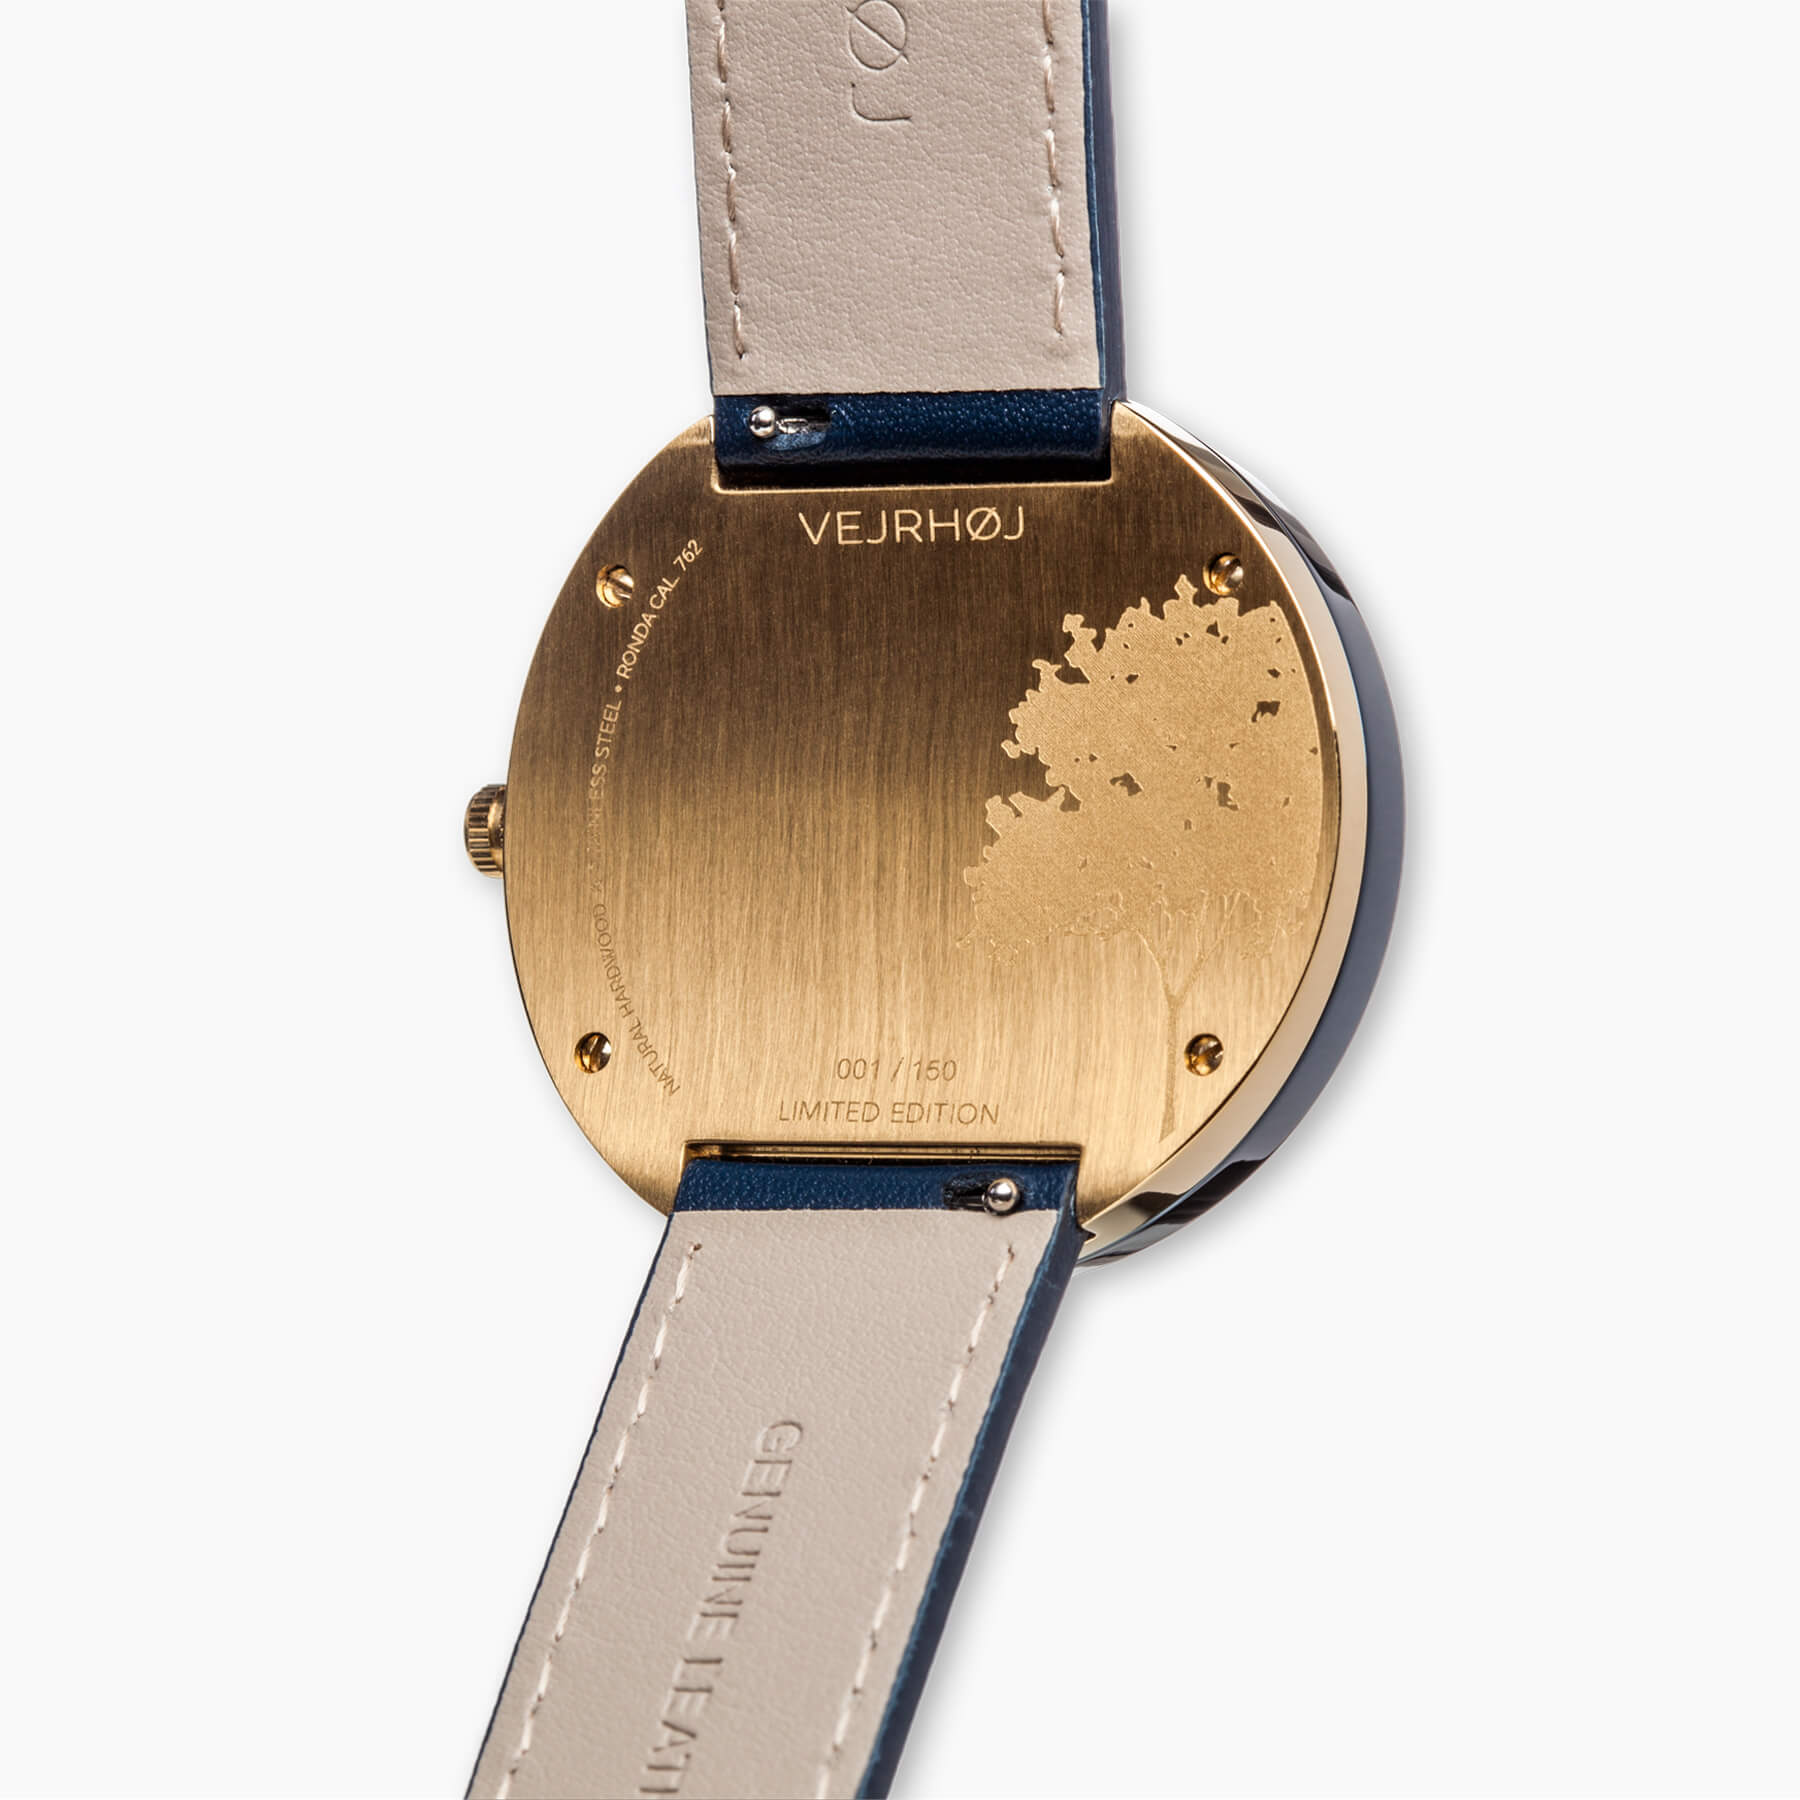 gold watch caseback with VEJRHØJ logo, serial number and tree engraving